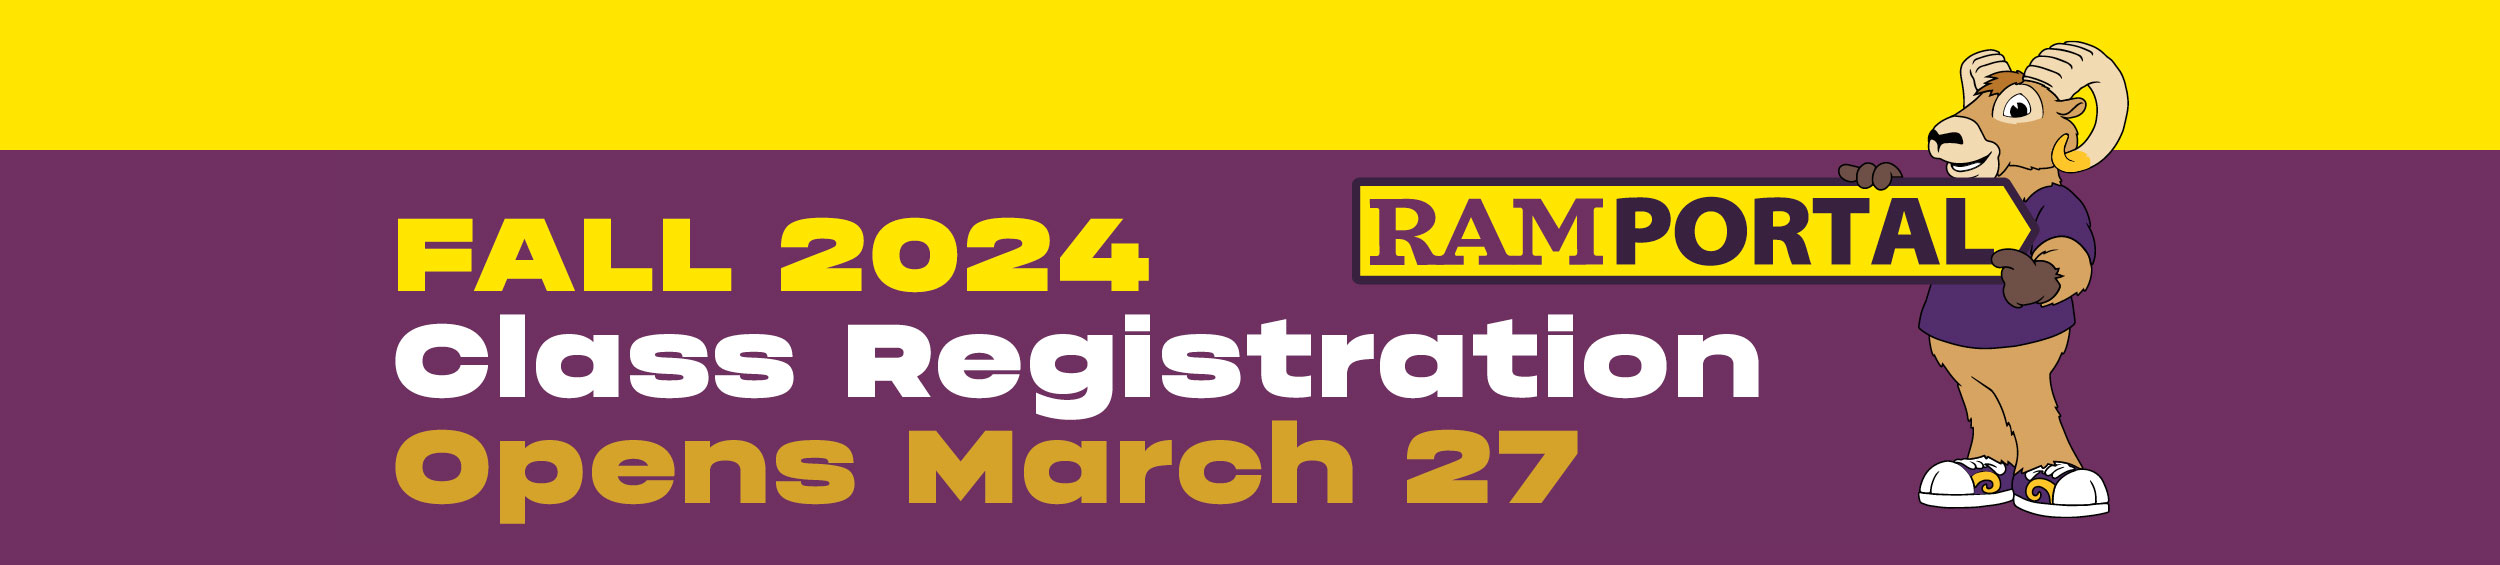 RamPortal - Fall 2024 Class Registration - Opens March 27